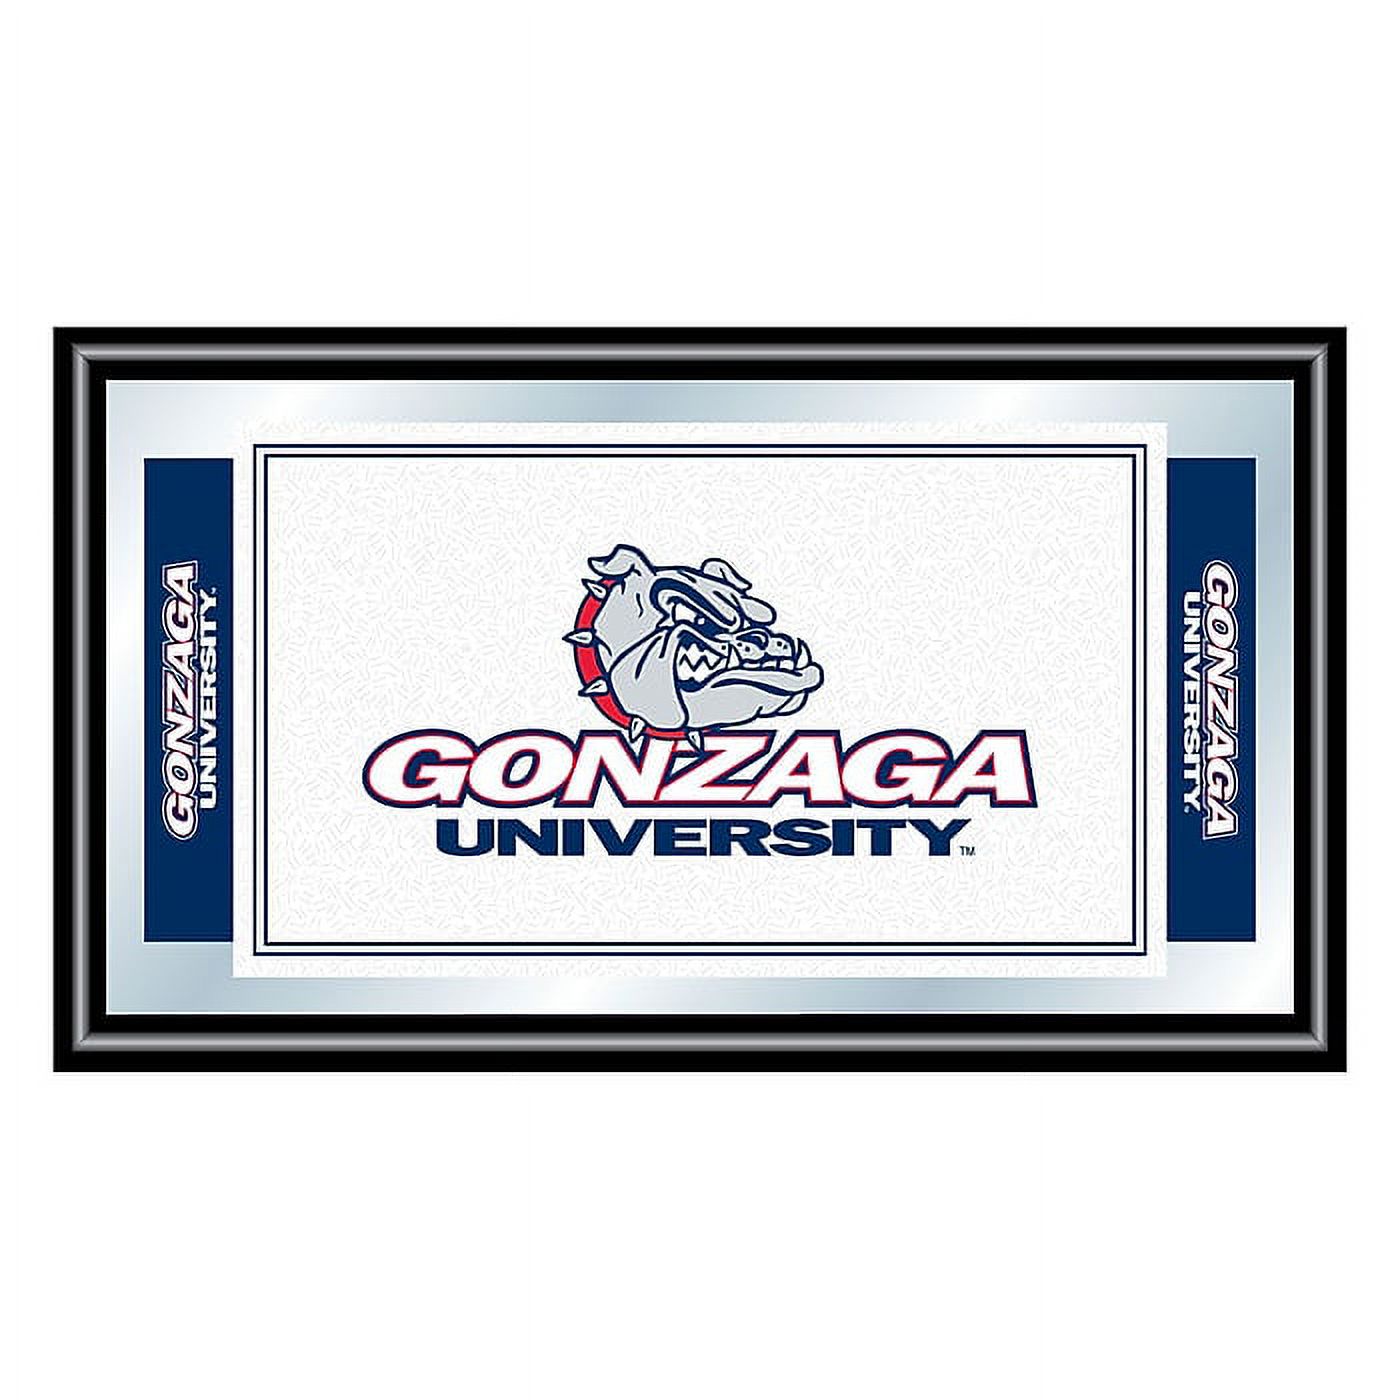 Trademark NCAA 15" x 26" x 3/4" Wooden Logo and Mascot Framed Mirror, Gonzaga University - image 1 of 2